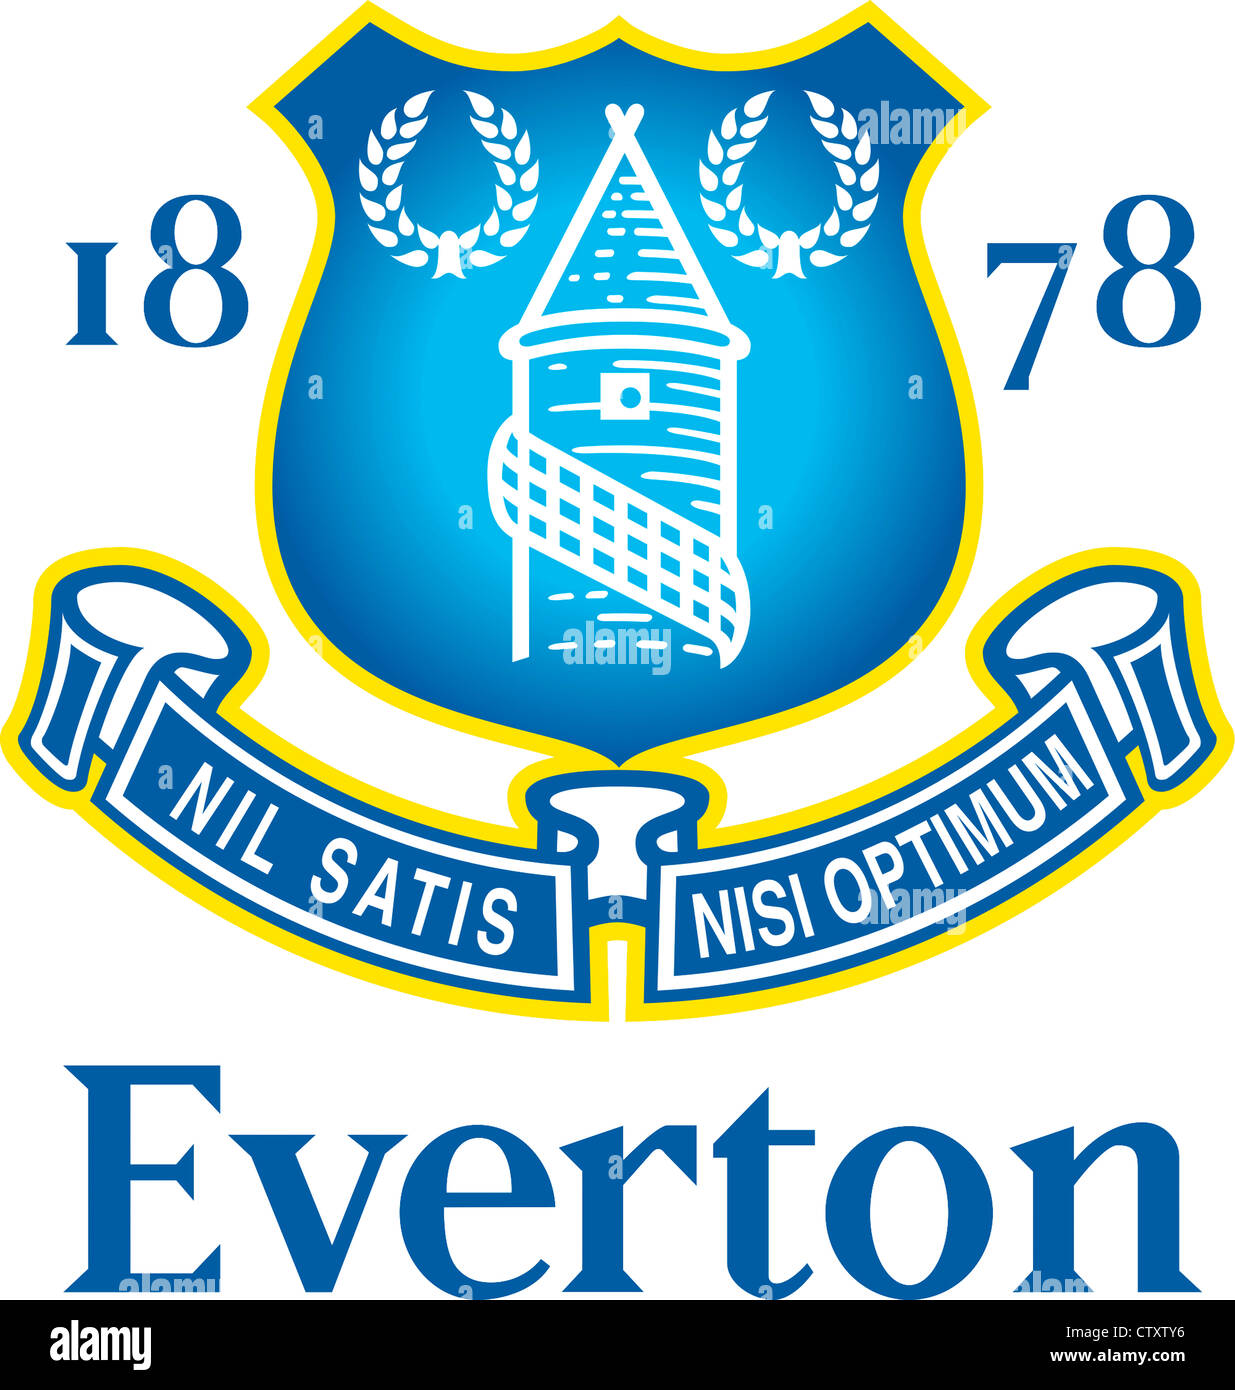 Logo de l'équipe anglaise de football Everton Football Club. Banque D'Images